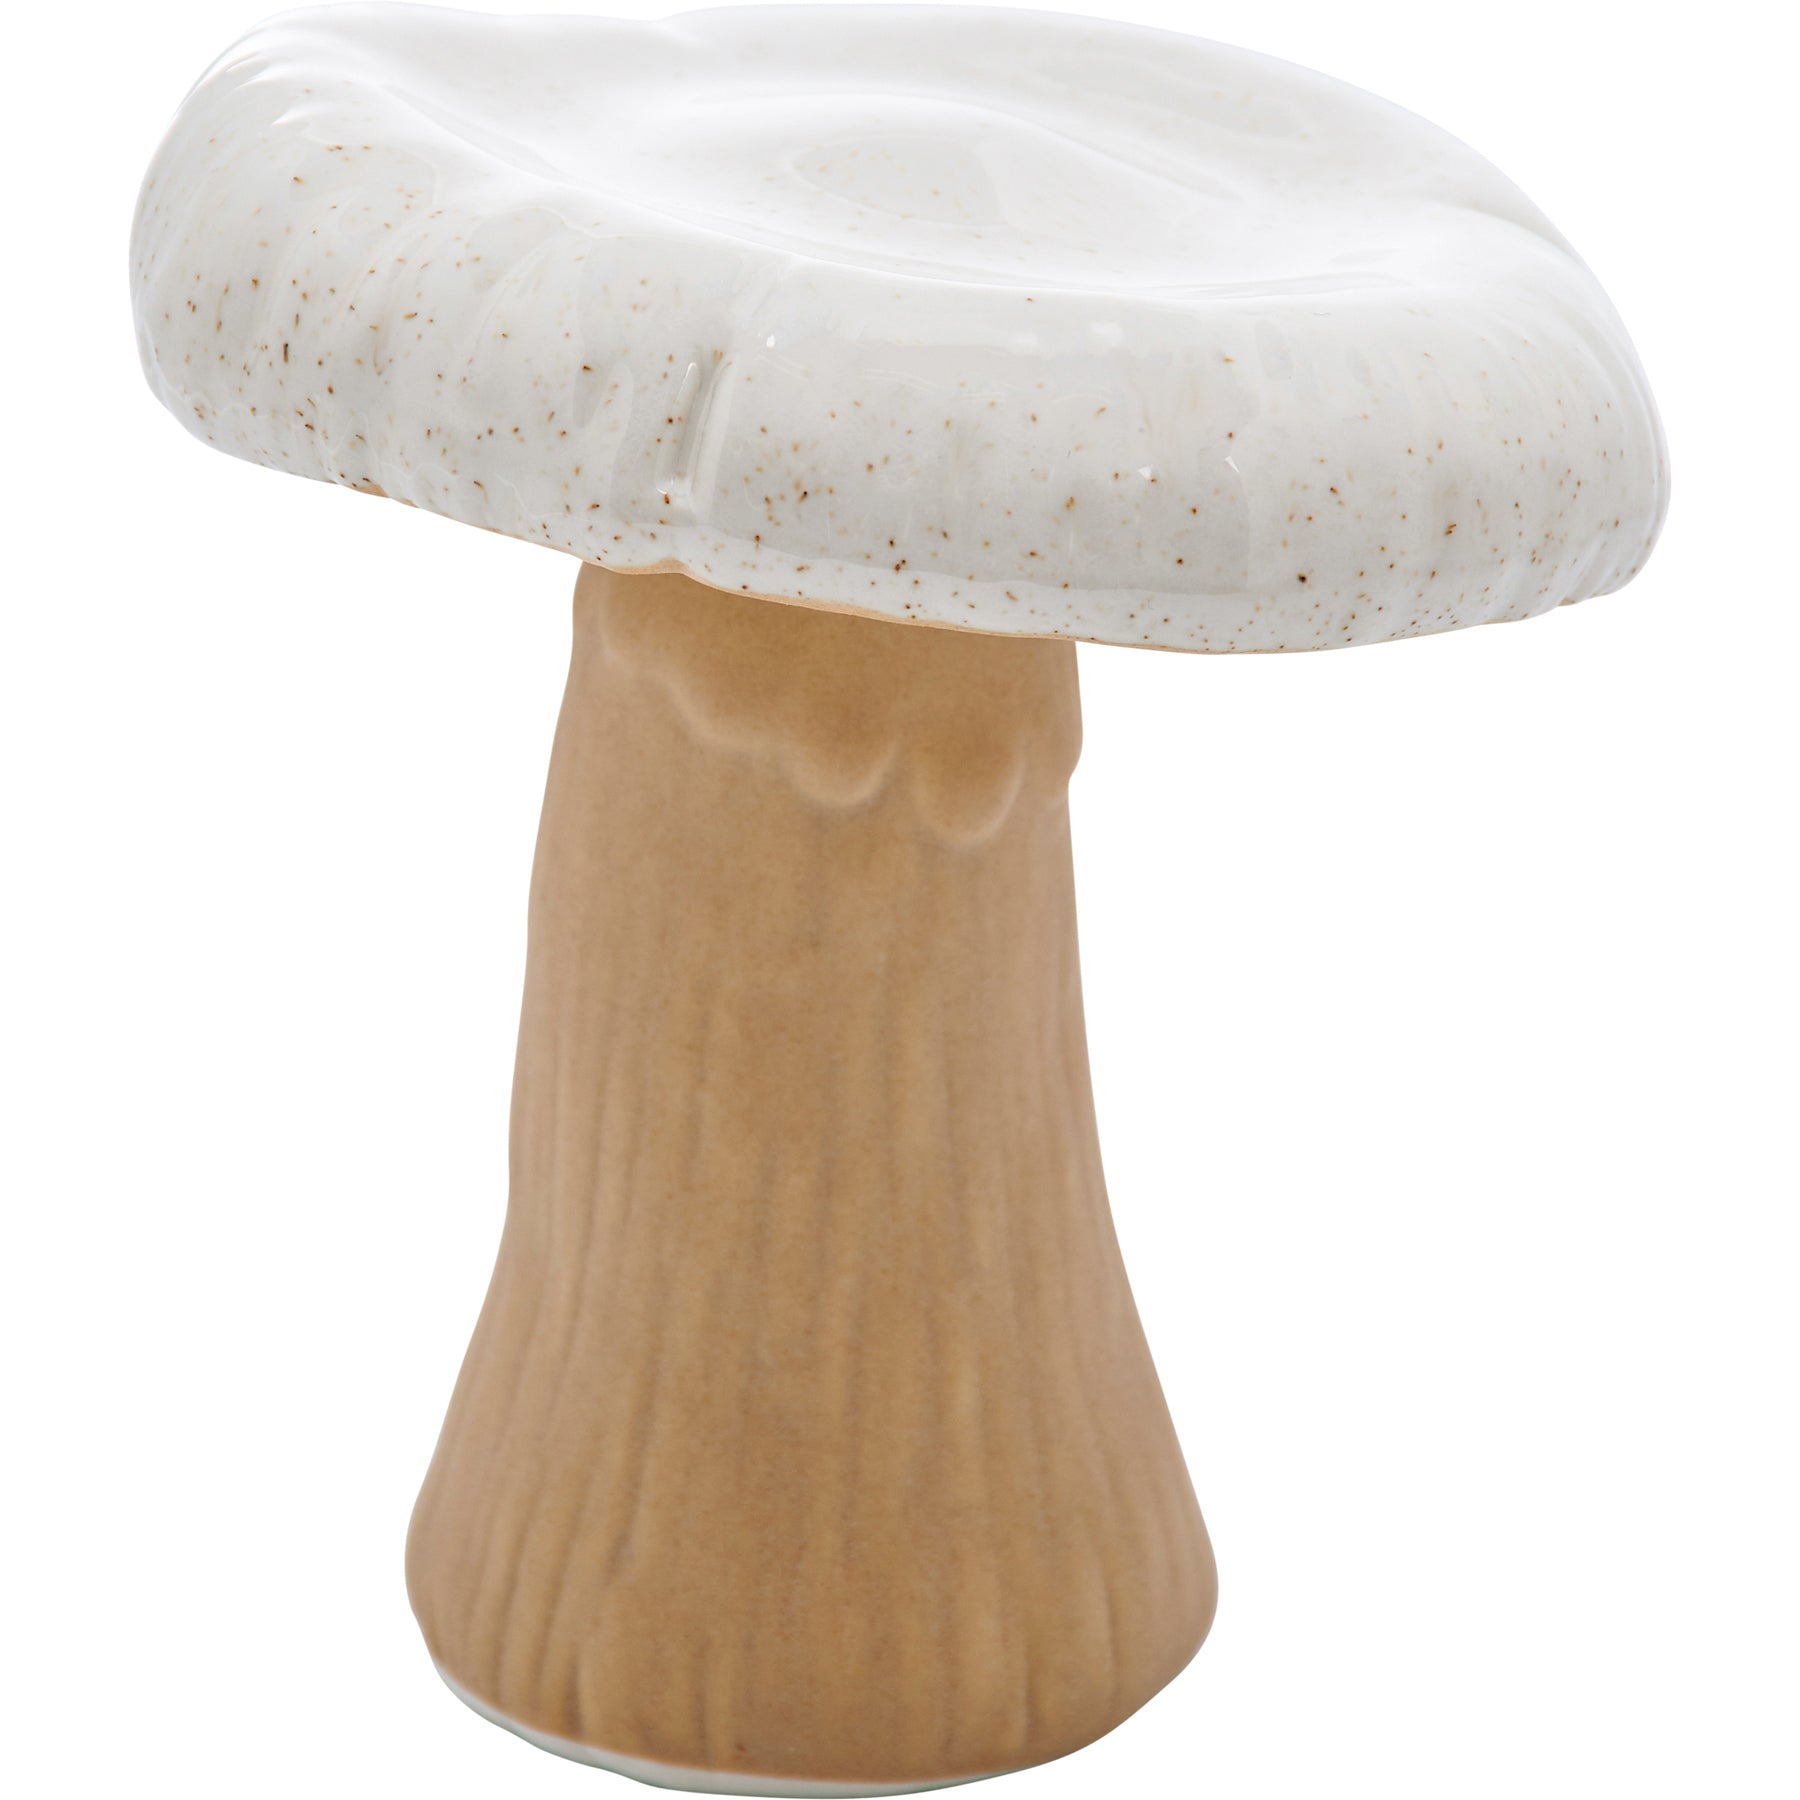 large wild mushroom figurine on a white background